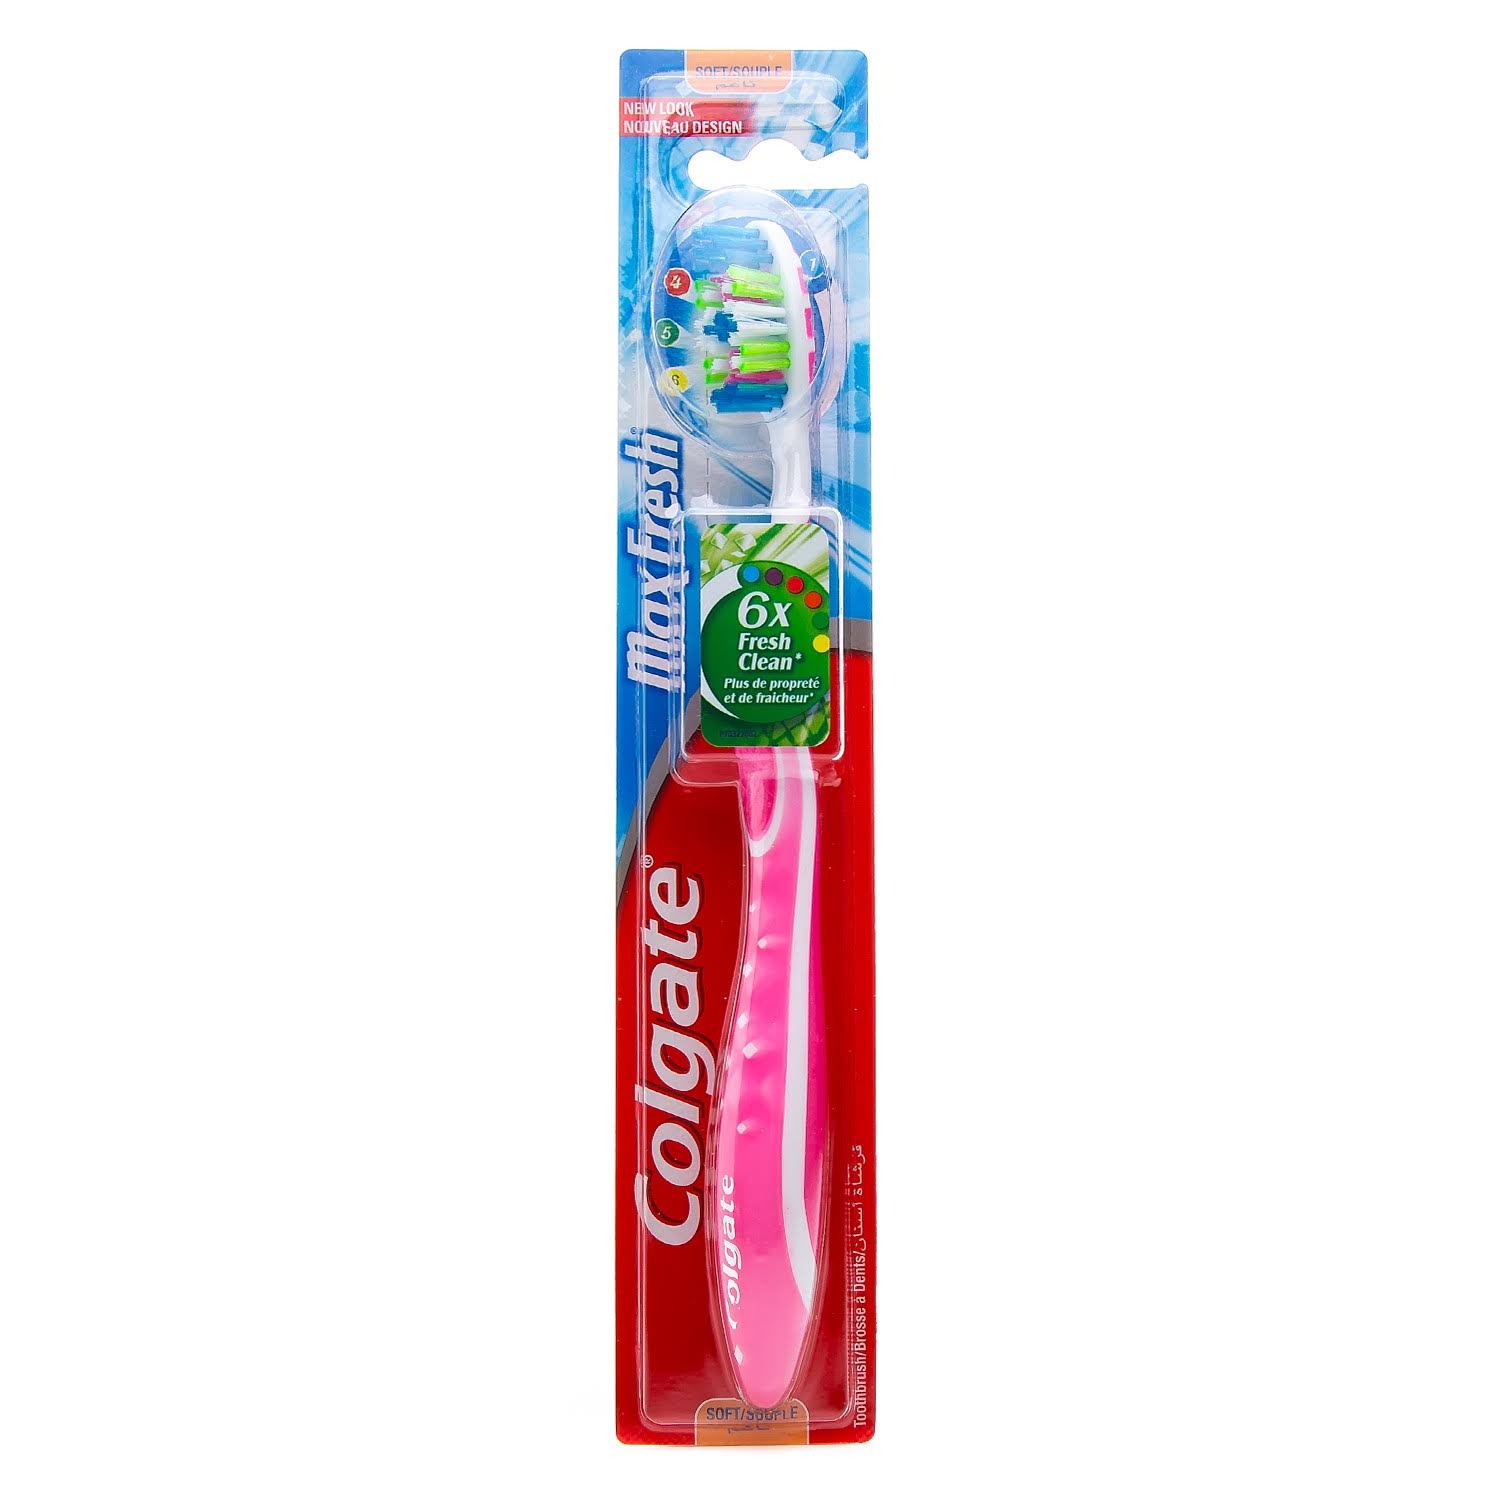 Colgate Max Fresh Soft Toothbrush by dpharmacy